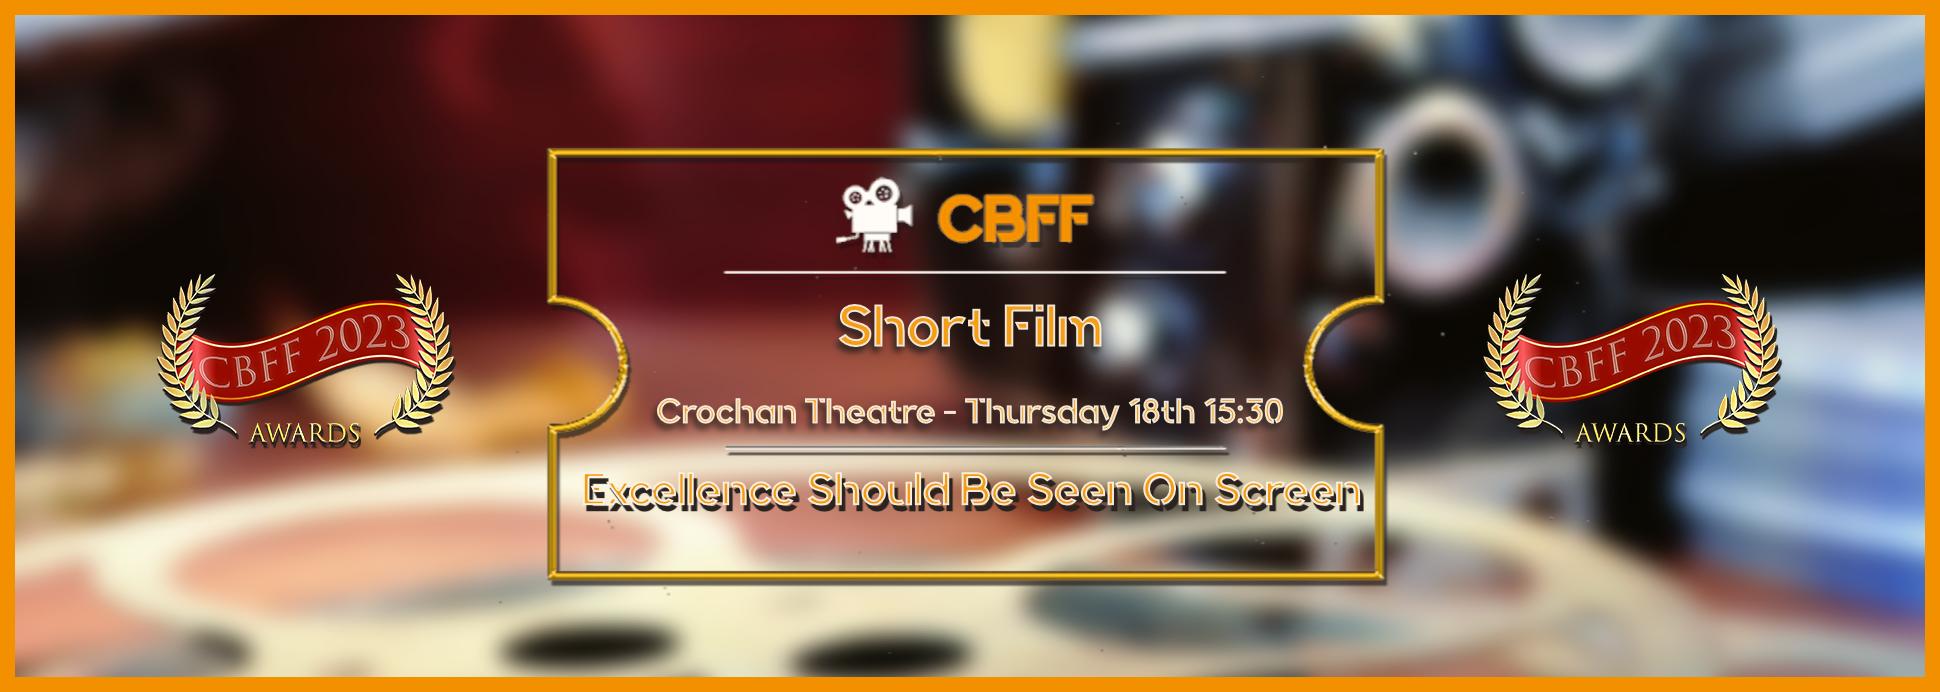 Crochan Theatre Short Film 18th 15:30